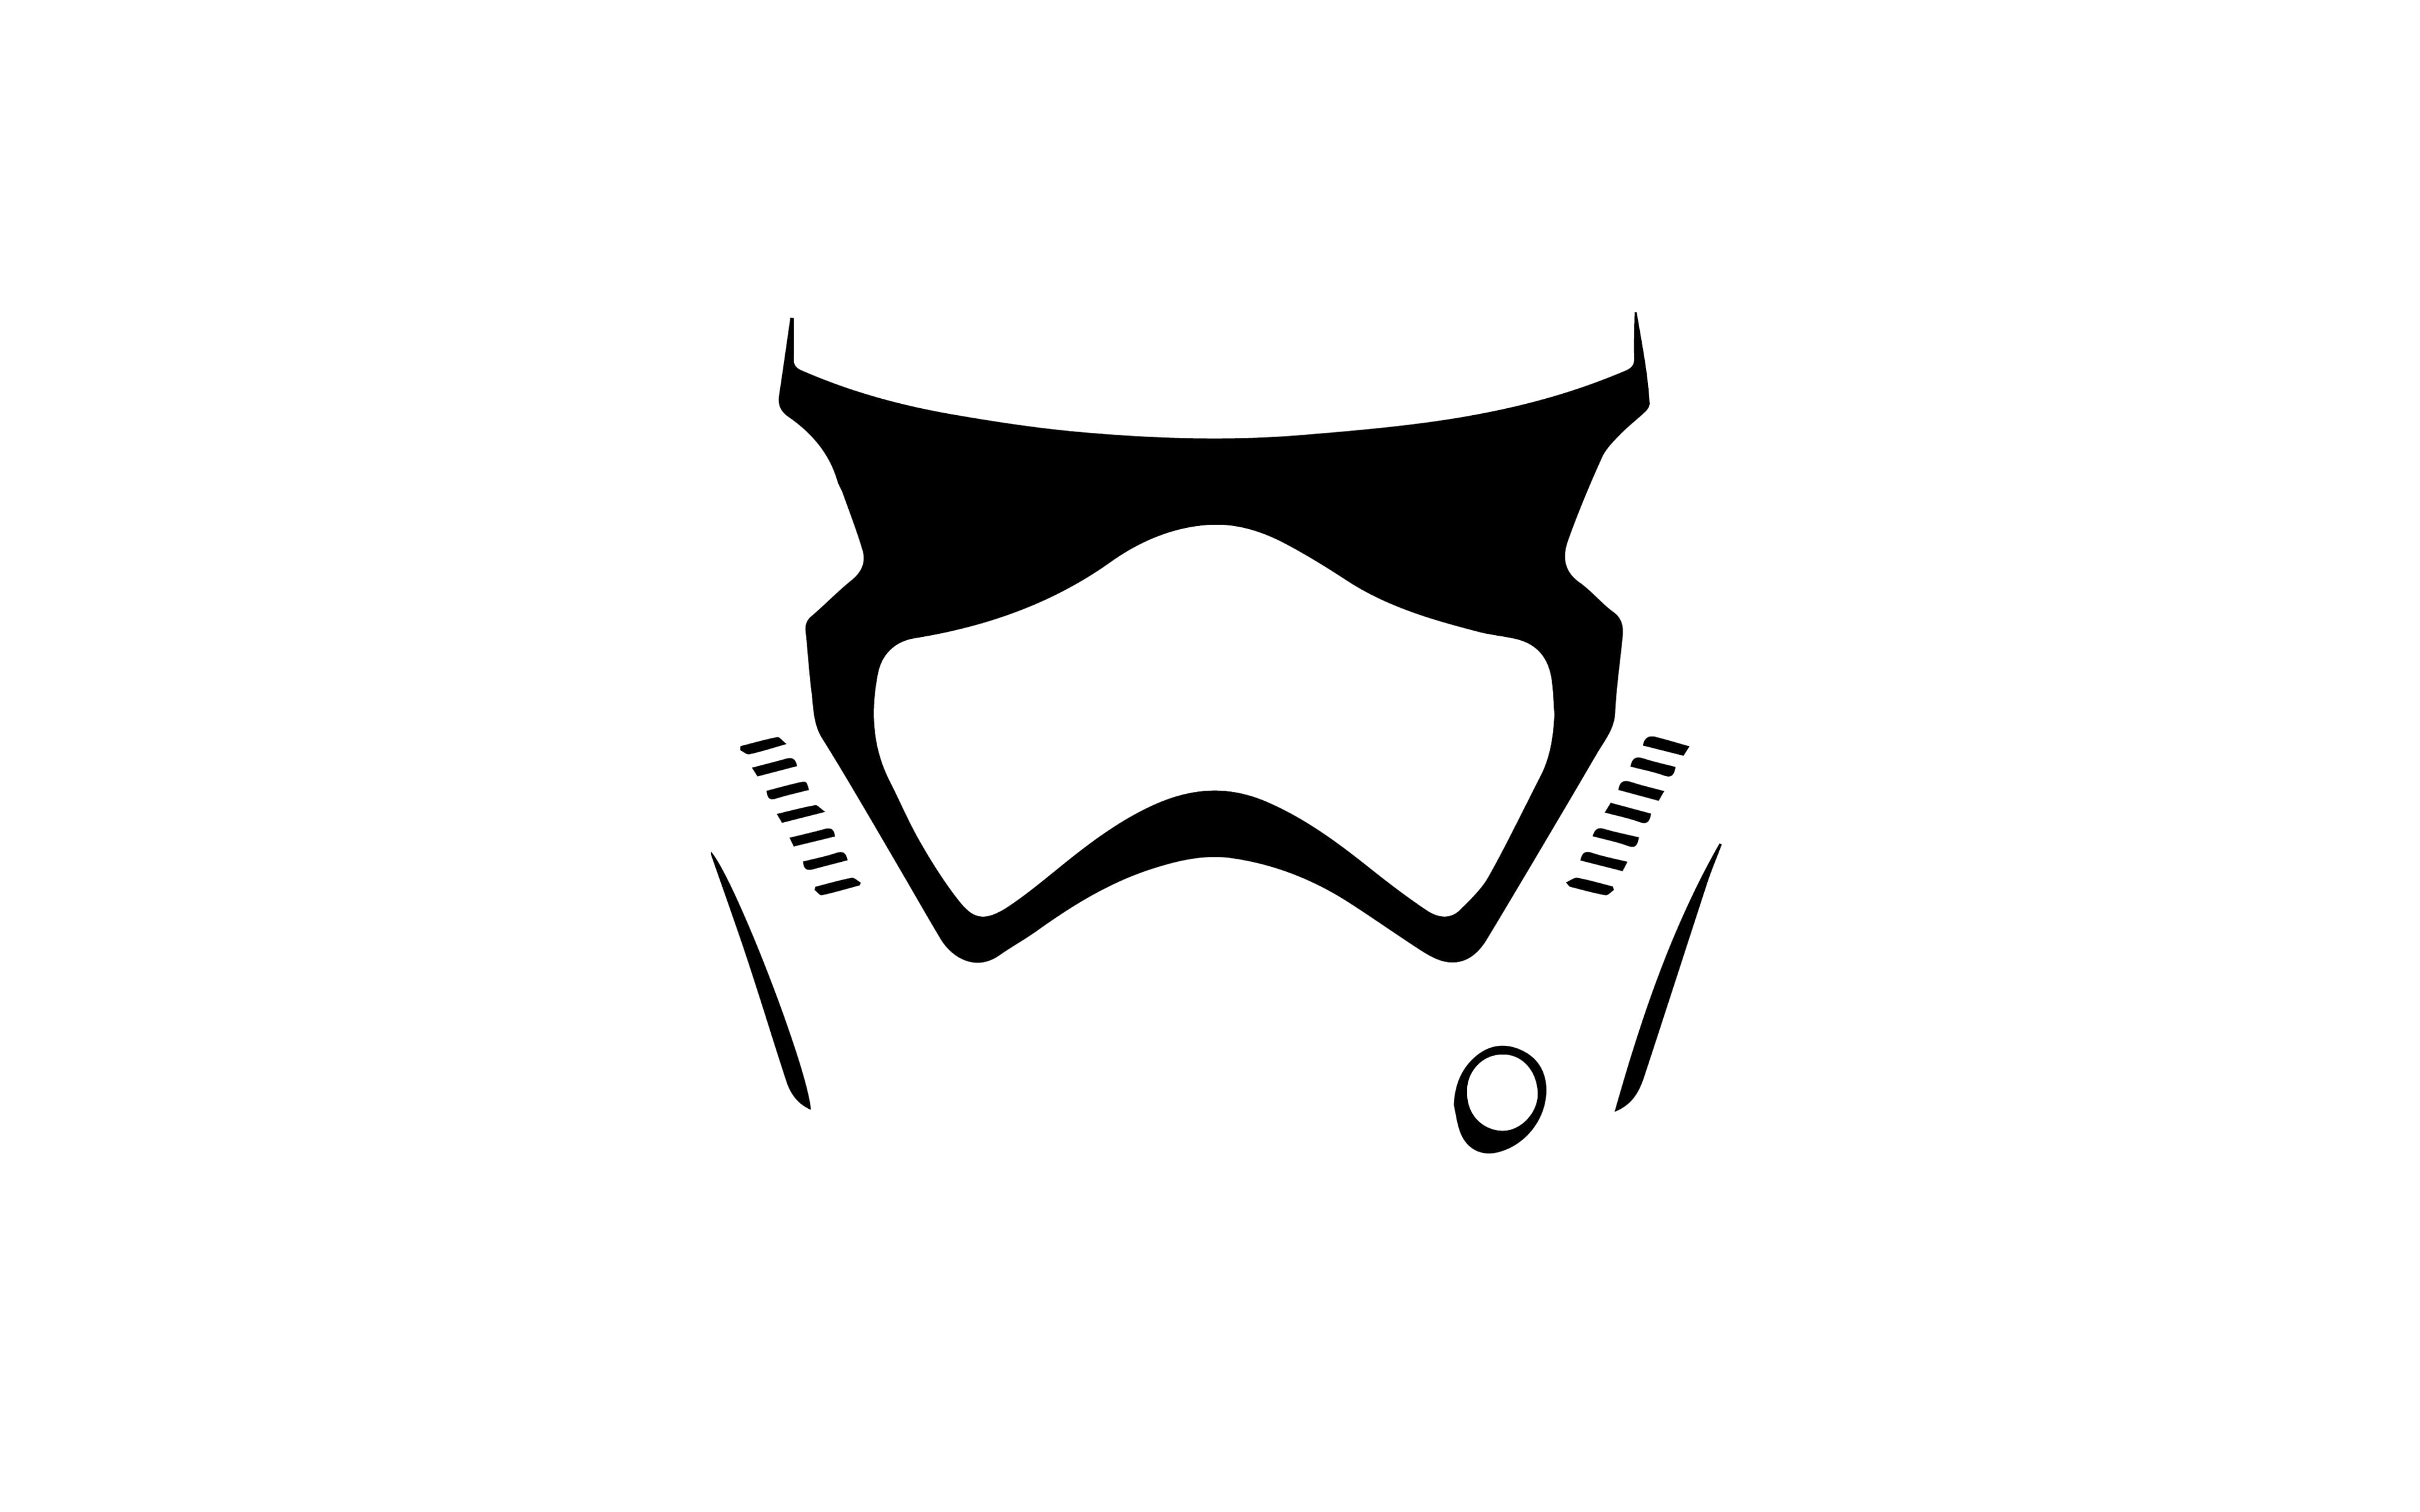 Star Wars Stormtrooper graphic wallpaper, Star Wars: The Force Awakens, Star Wars, stormtrooper, minimalism